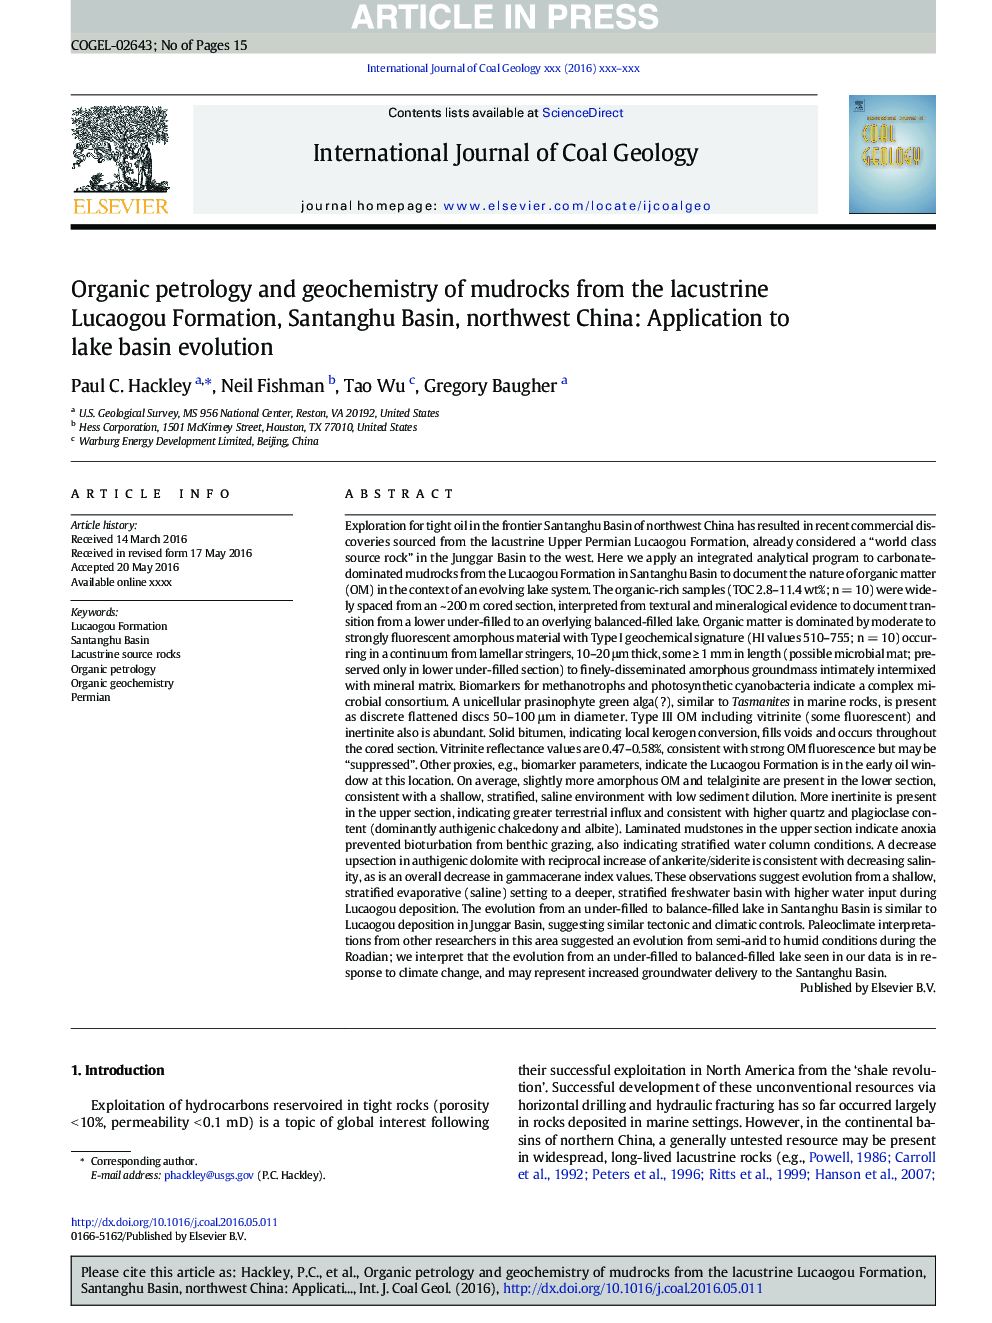 Organic petrology and geochemistry of mudrocks from the lacustrine Lucaogou Formation, Santanghu Basin, northwest China: Application to lake basin evolution